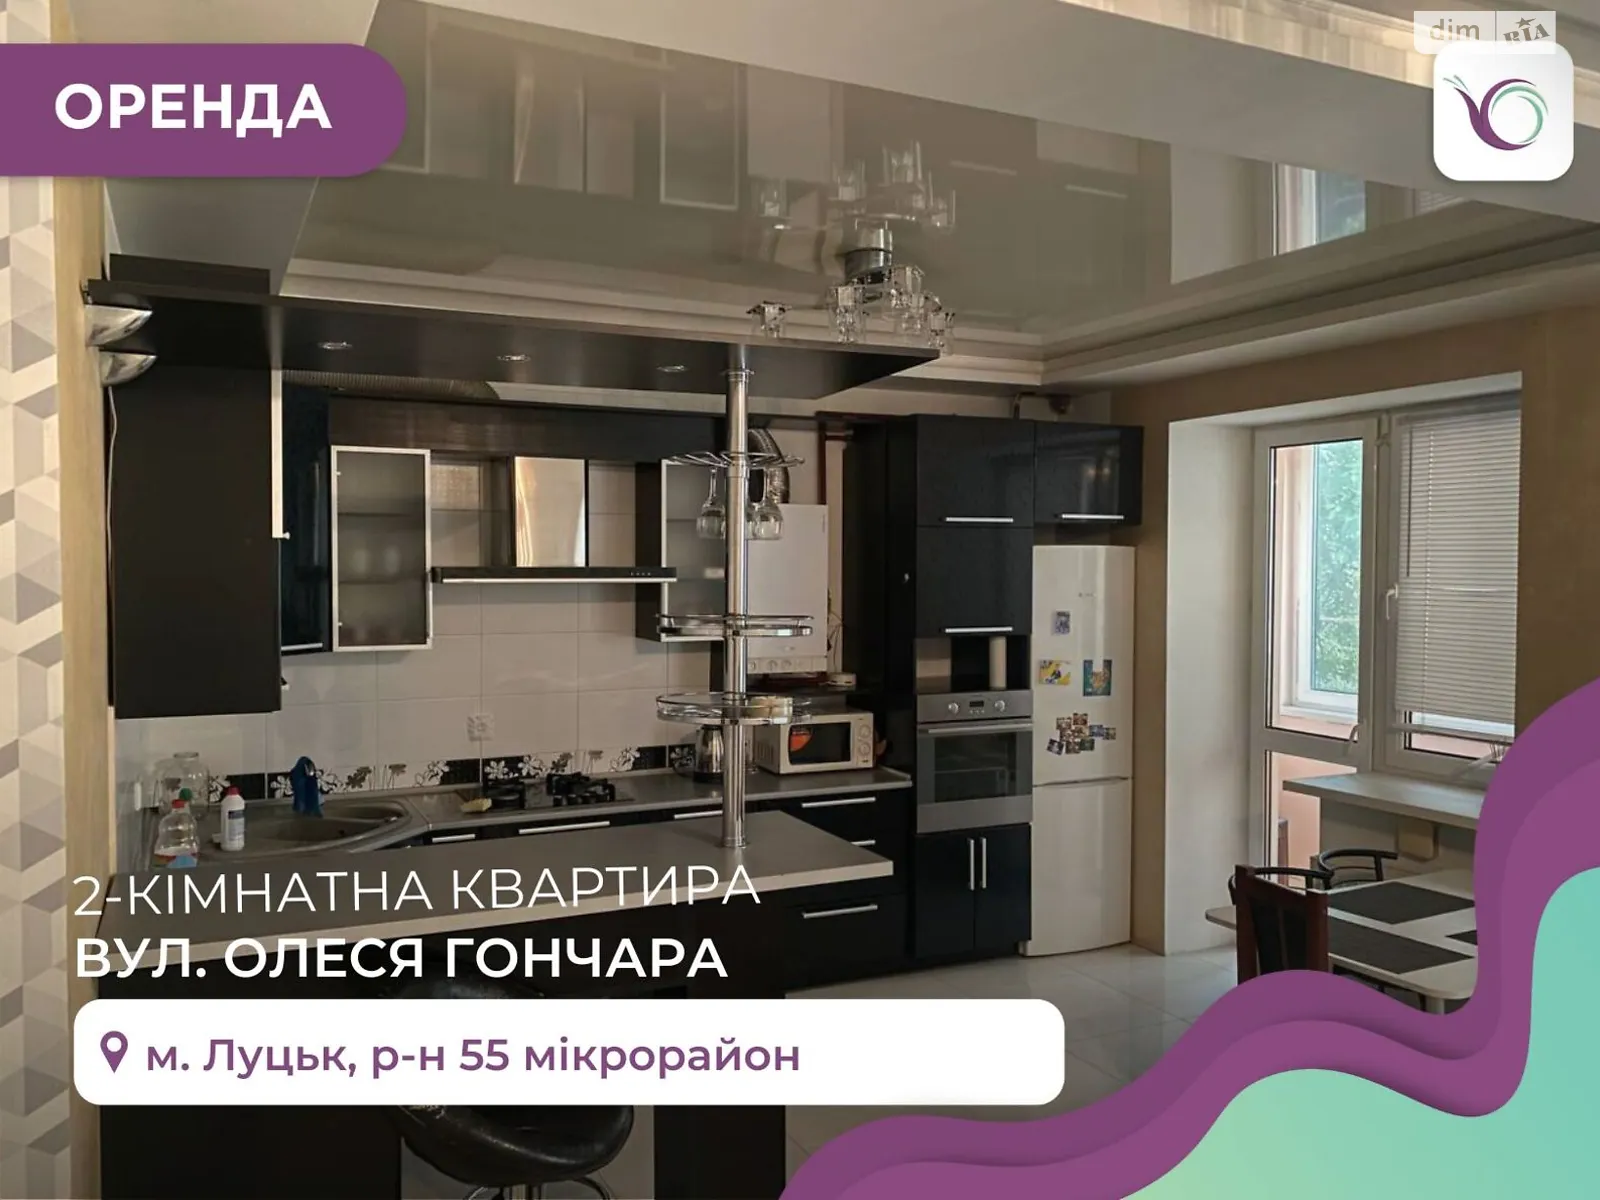 2-кімнатна квартира 69 кв. м у Луцьку, цена: 14000 грн